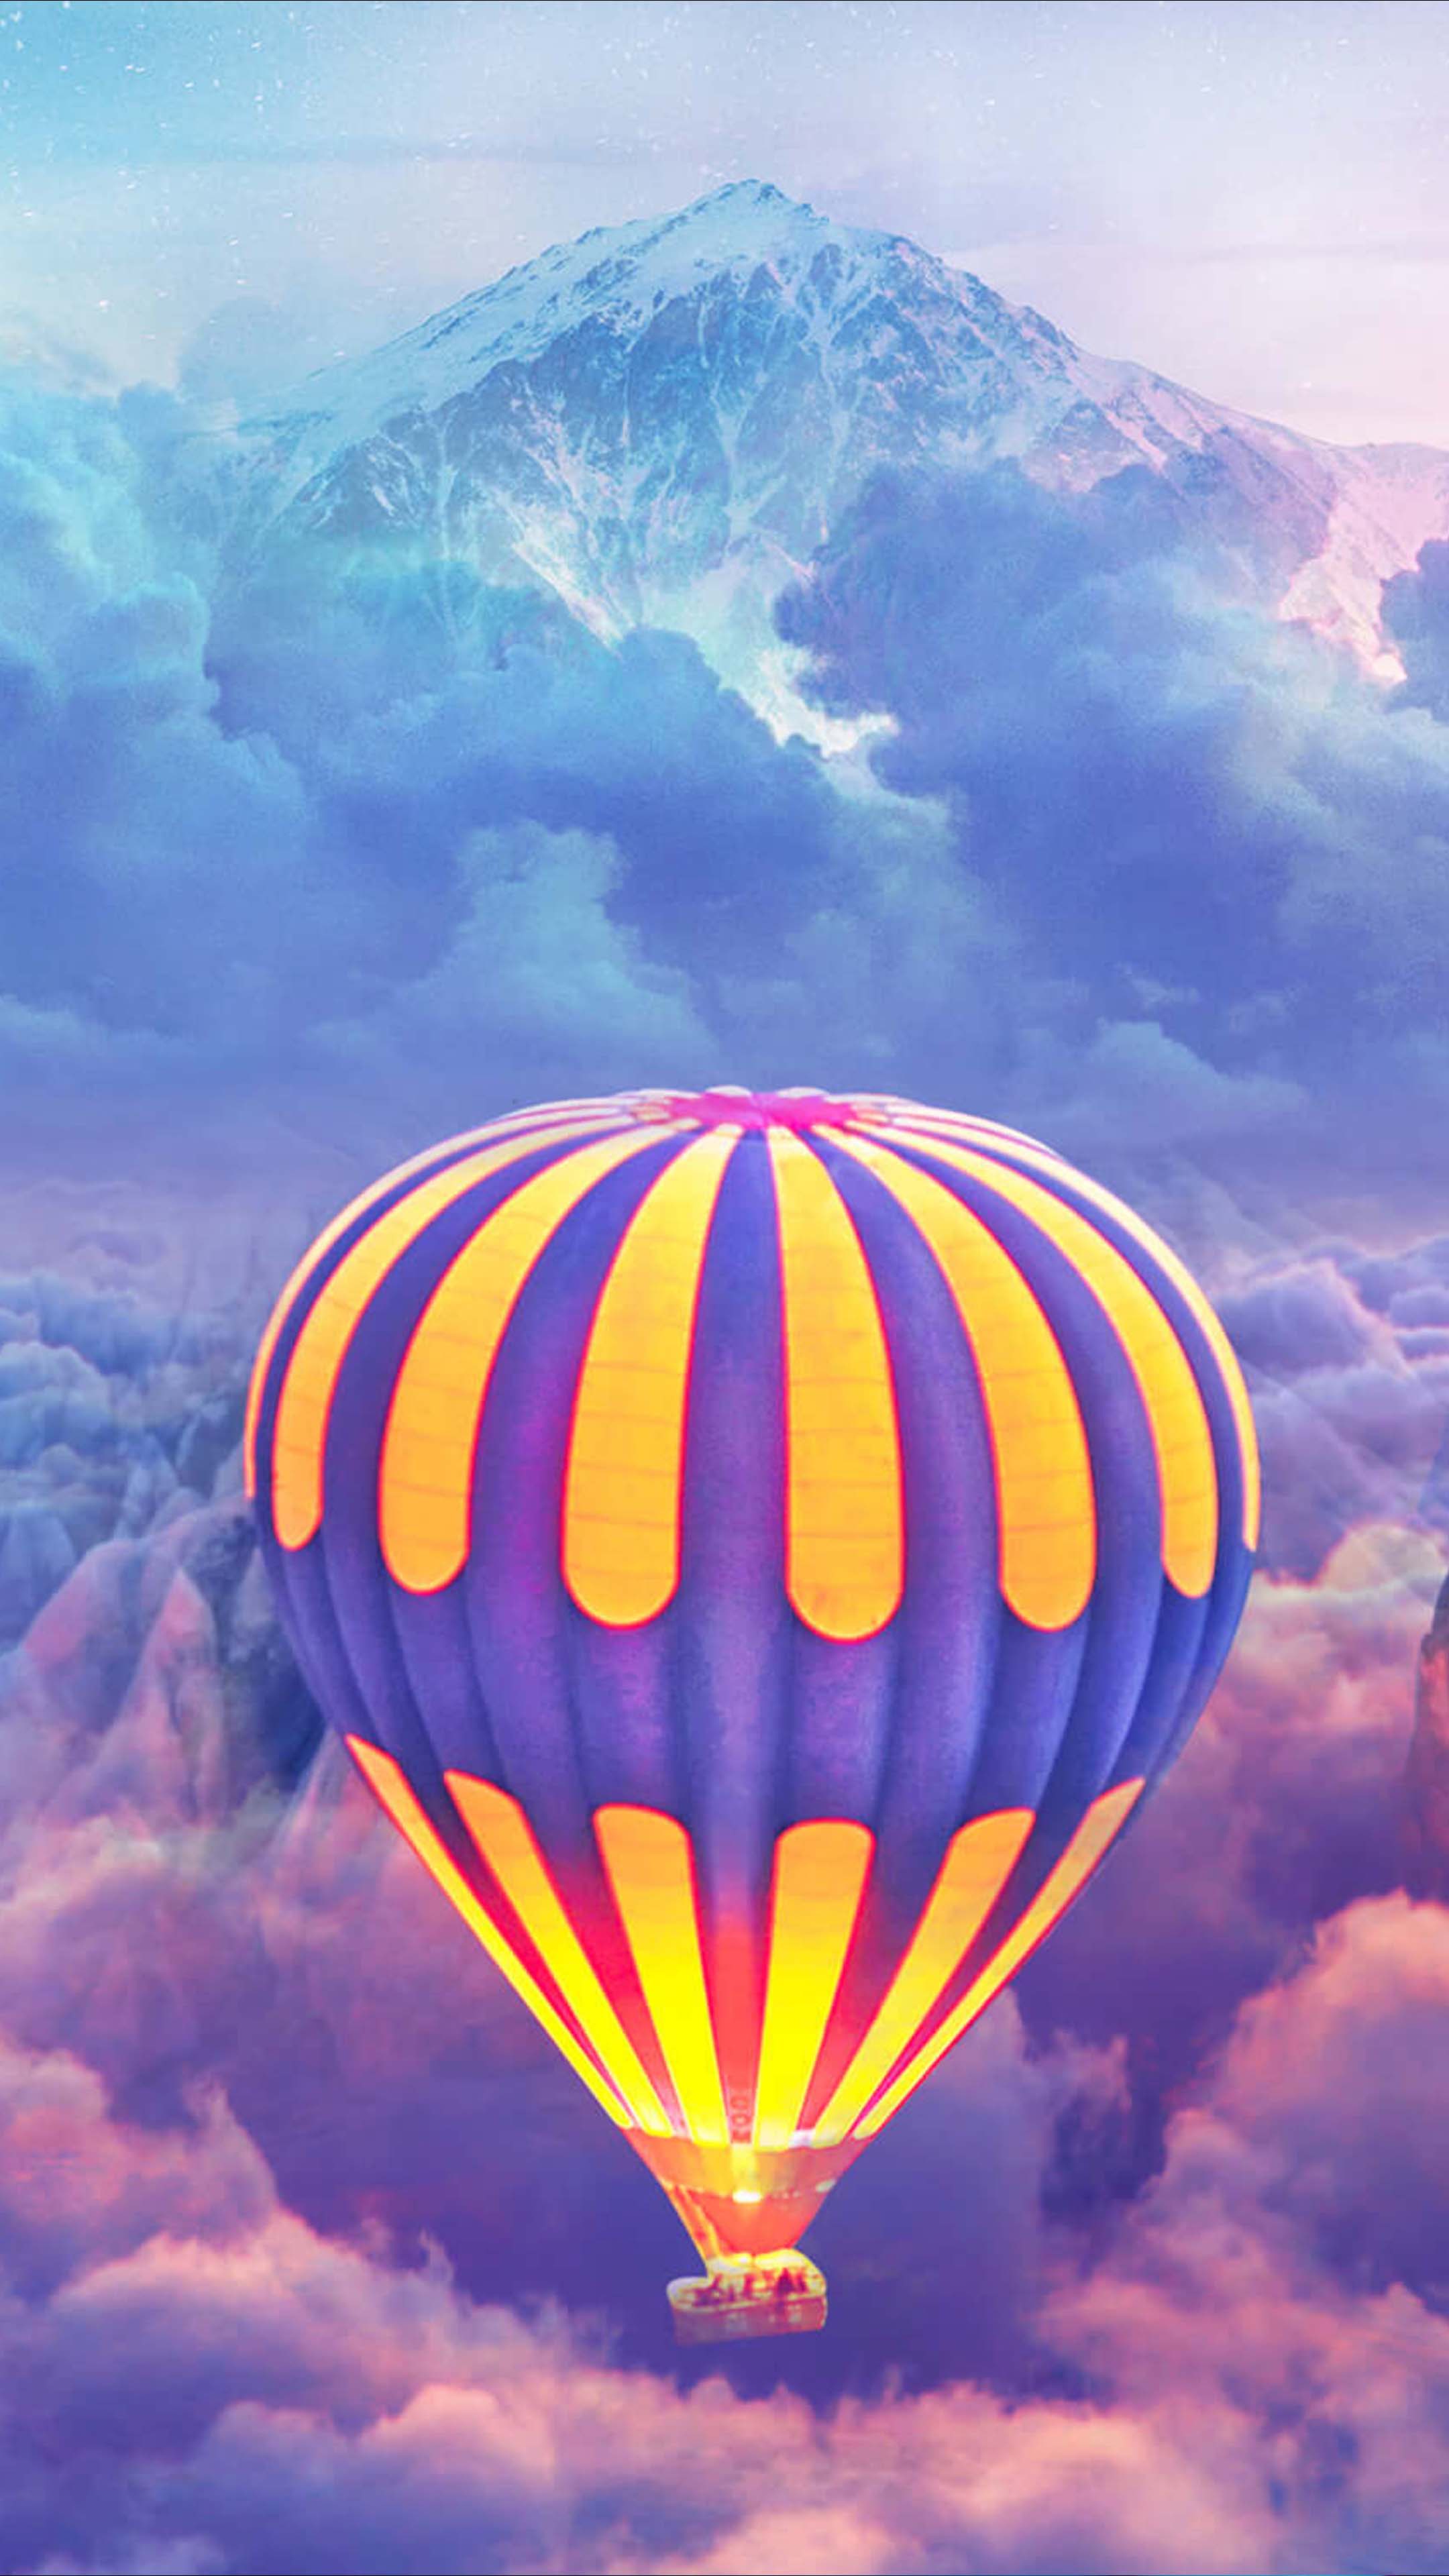 Hot Air Balloons Over The Cloud Mountain 4K Ultra HD Mobile Wallpaper